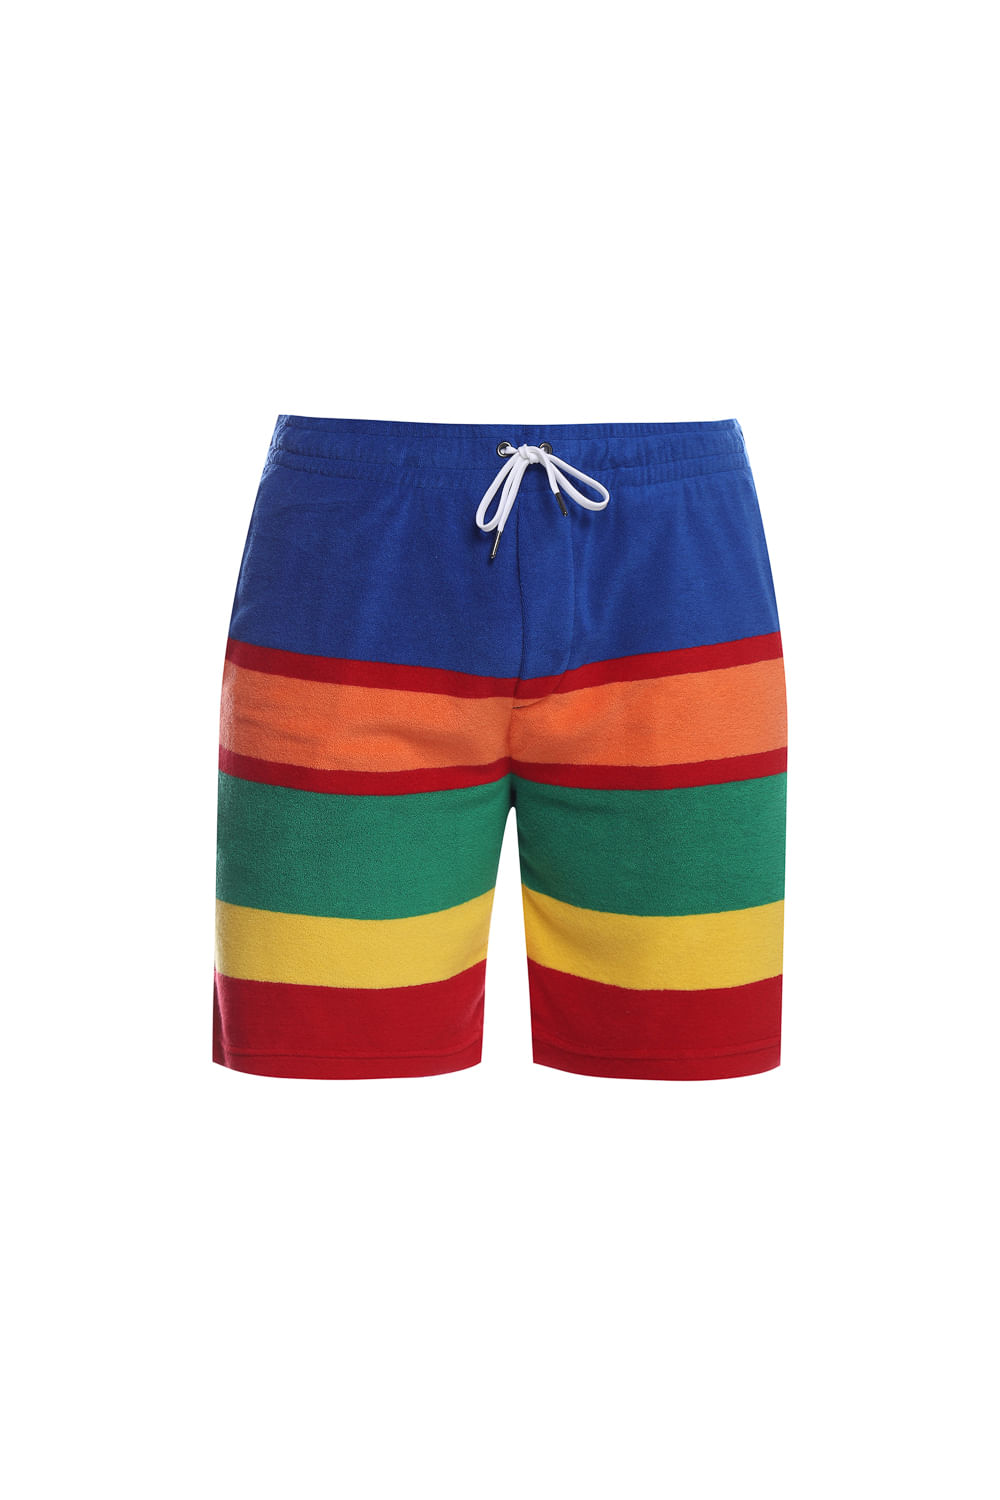 Shorts Terry Listrado - Regular | Compre na loja online | IGUATEMI 365